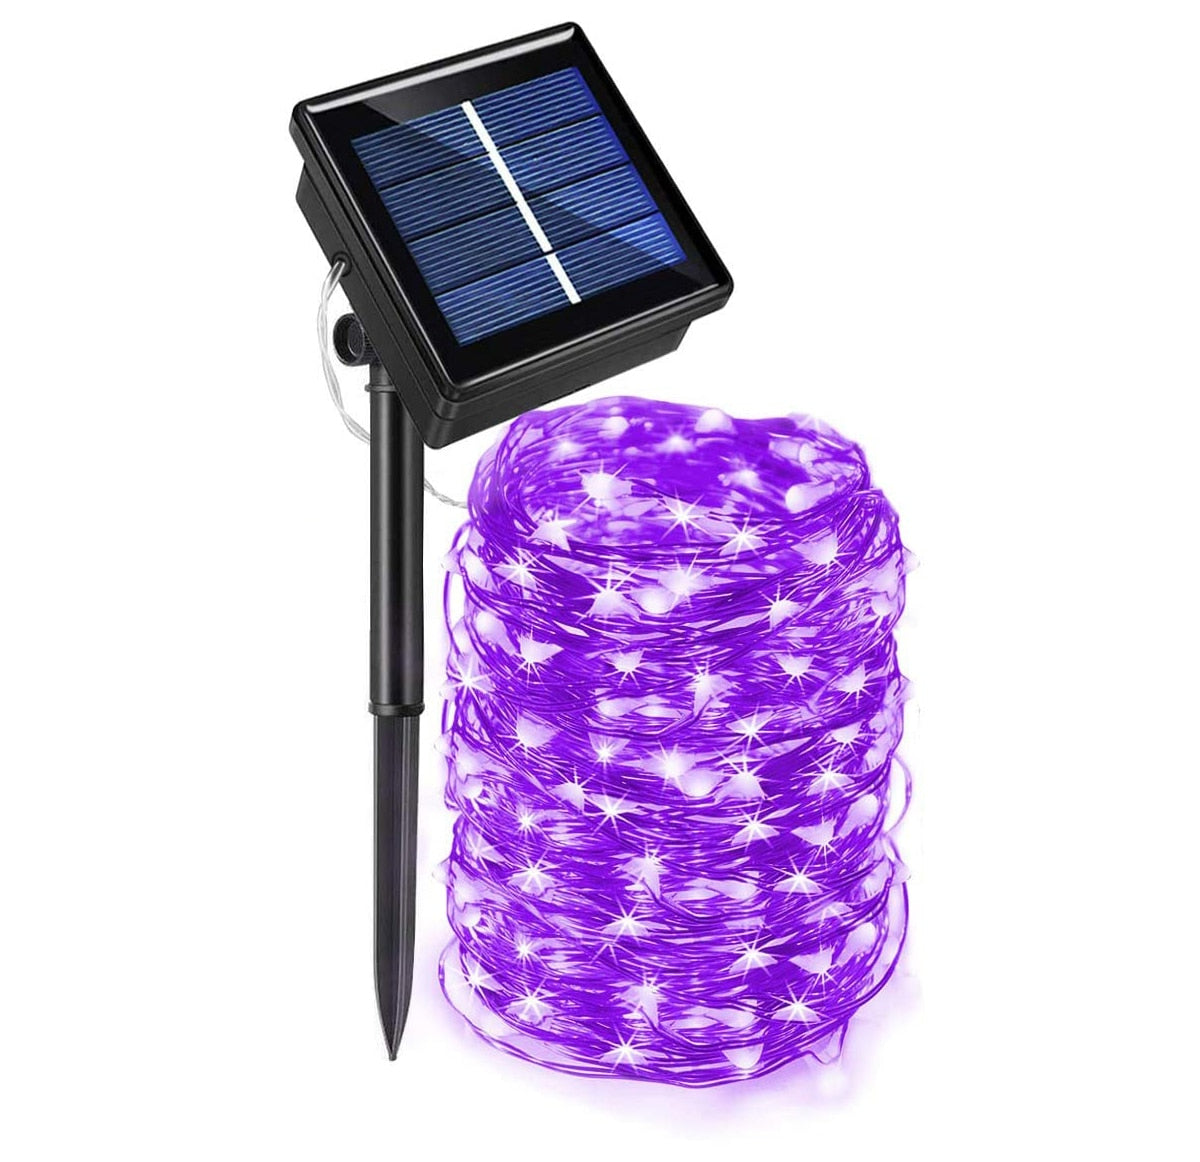 LED Outdoor Solar String Lights